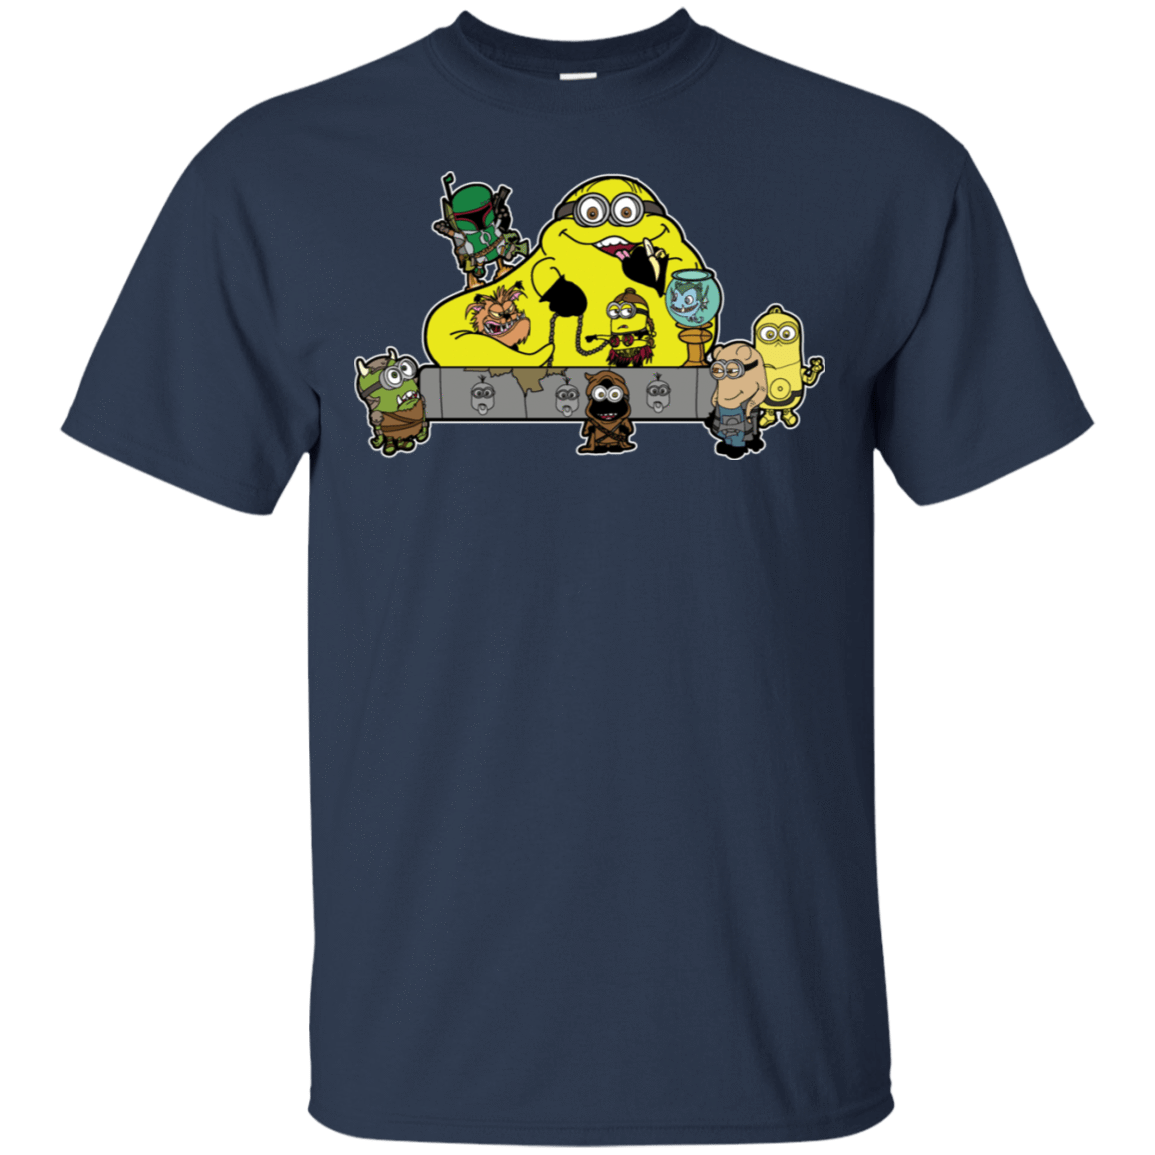 T-Shirts Navy / S Banana the Hutt T-Shirt